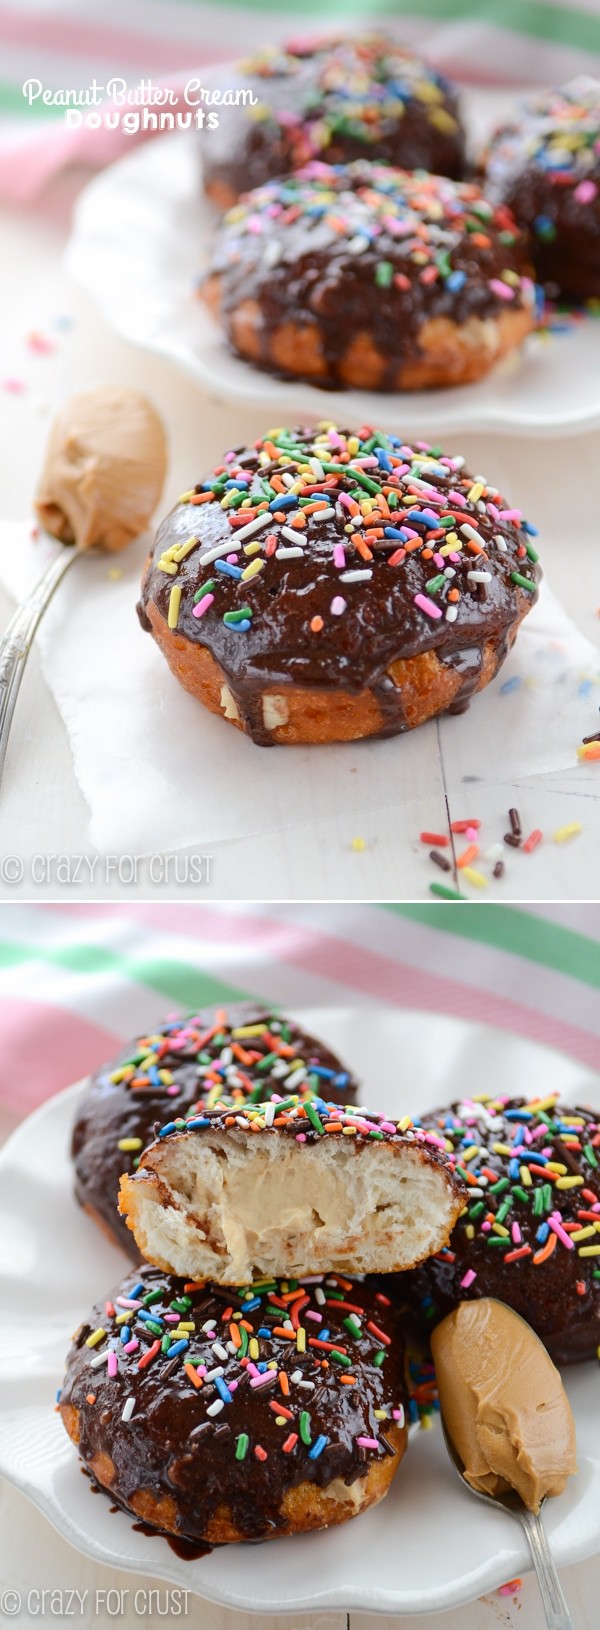 Peanut Butter Cream Doughnuts - easy fried doughnuts filled with peanut butter and topped with chocolate glaze!